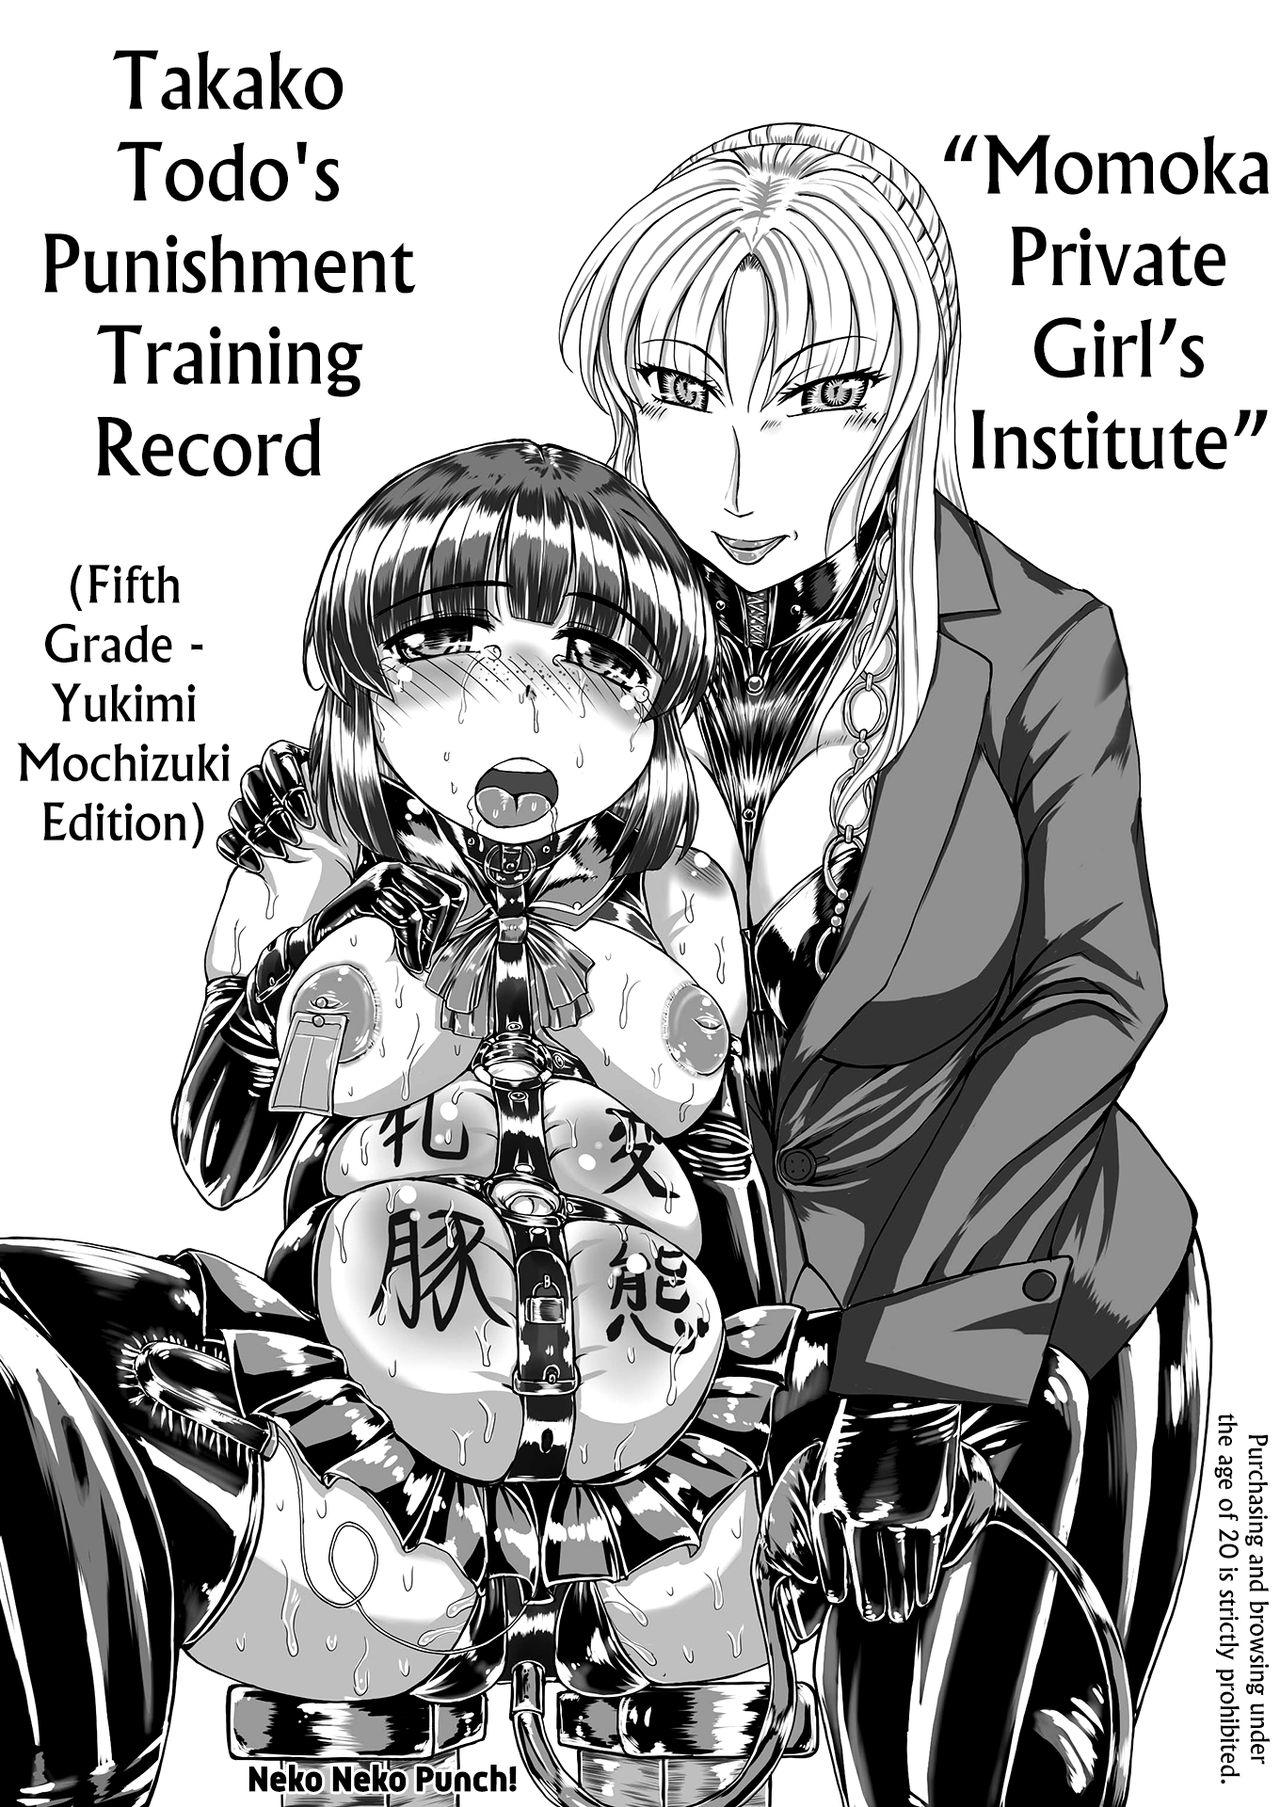 Brother [Neko Neko Panchu!] [Momoka Private Girls Institute] [Takako Todo's Punishment Training Record] (Fifth Grade - Yukimi Mochizuki Edition) [English] Verga - Page 1